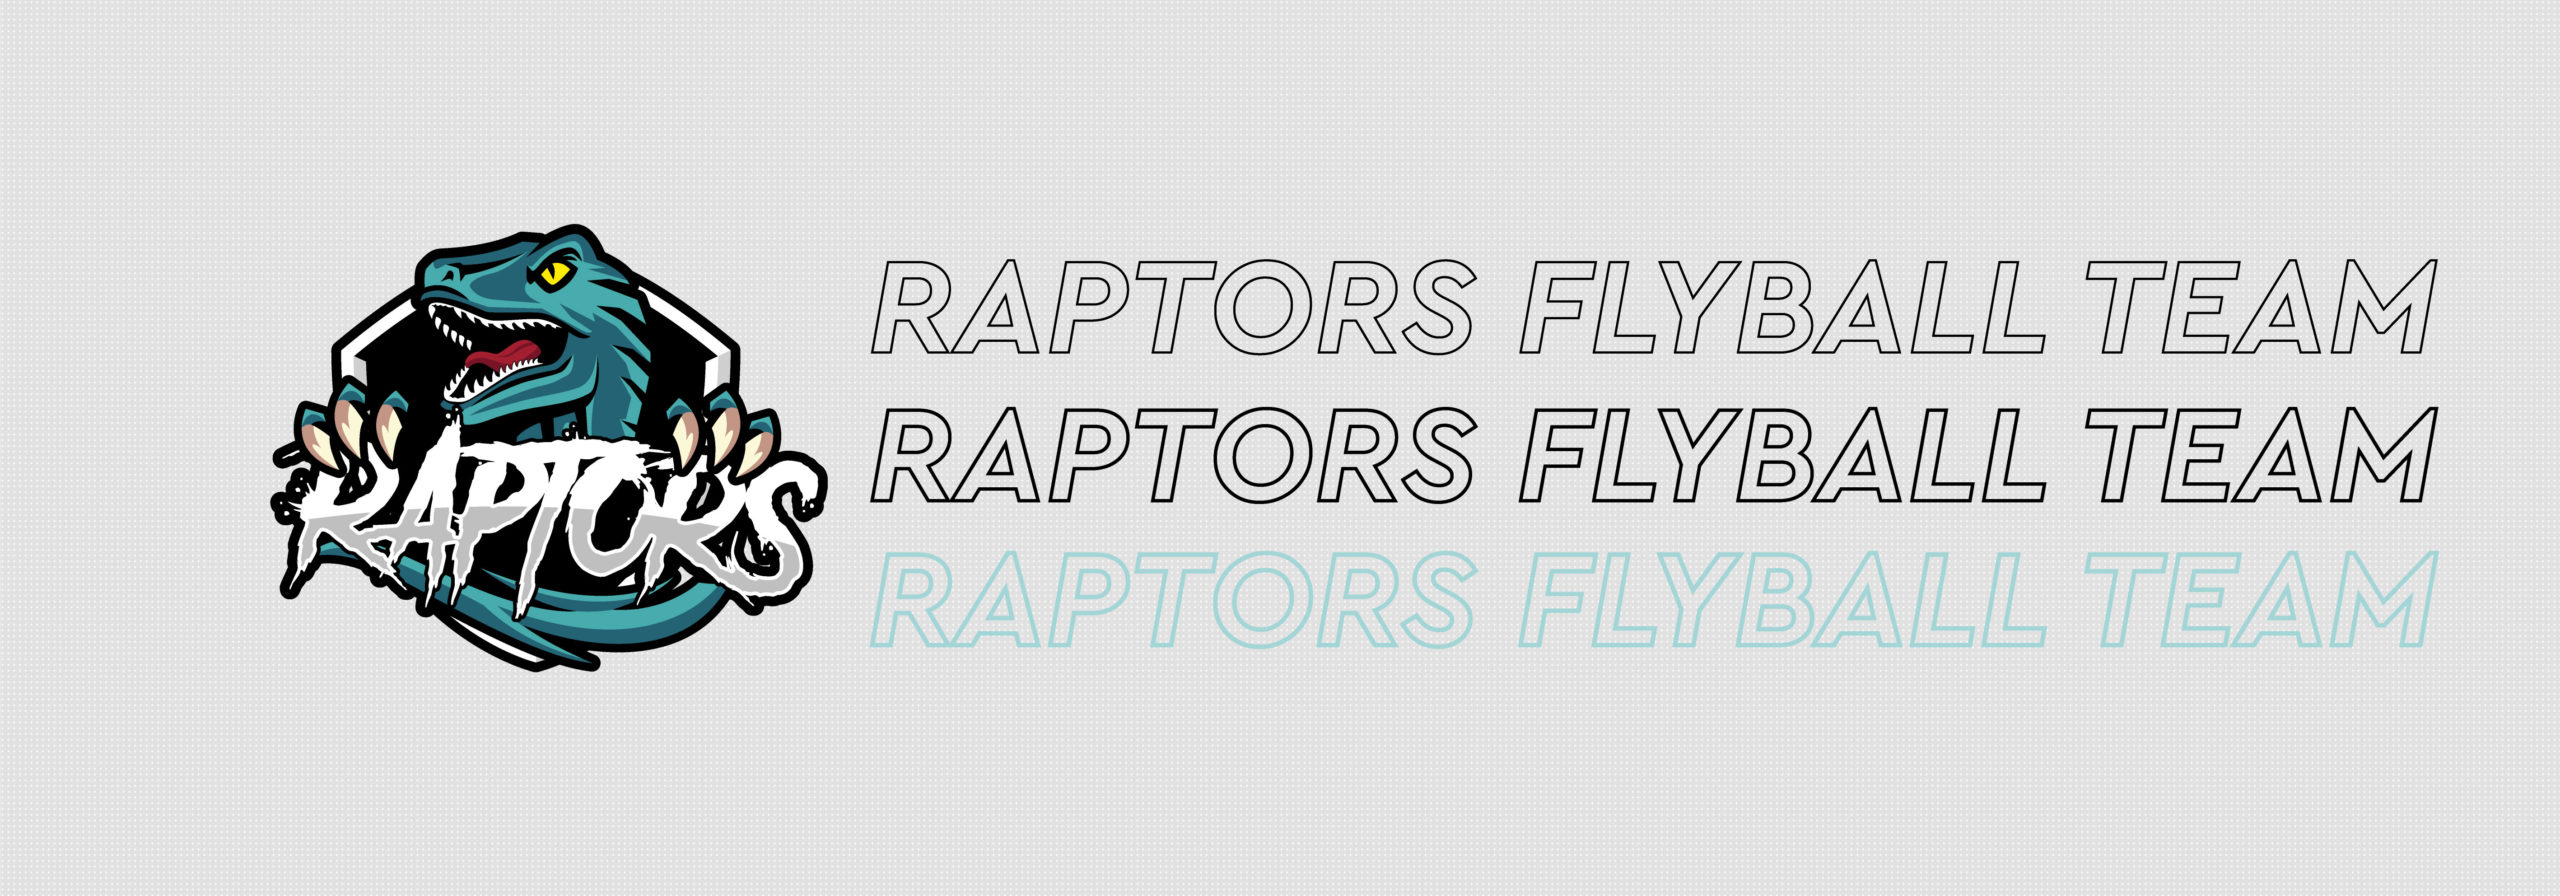 Raptors Flyball Team